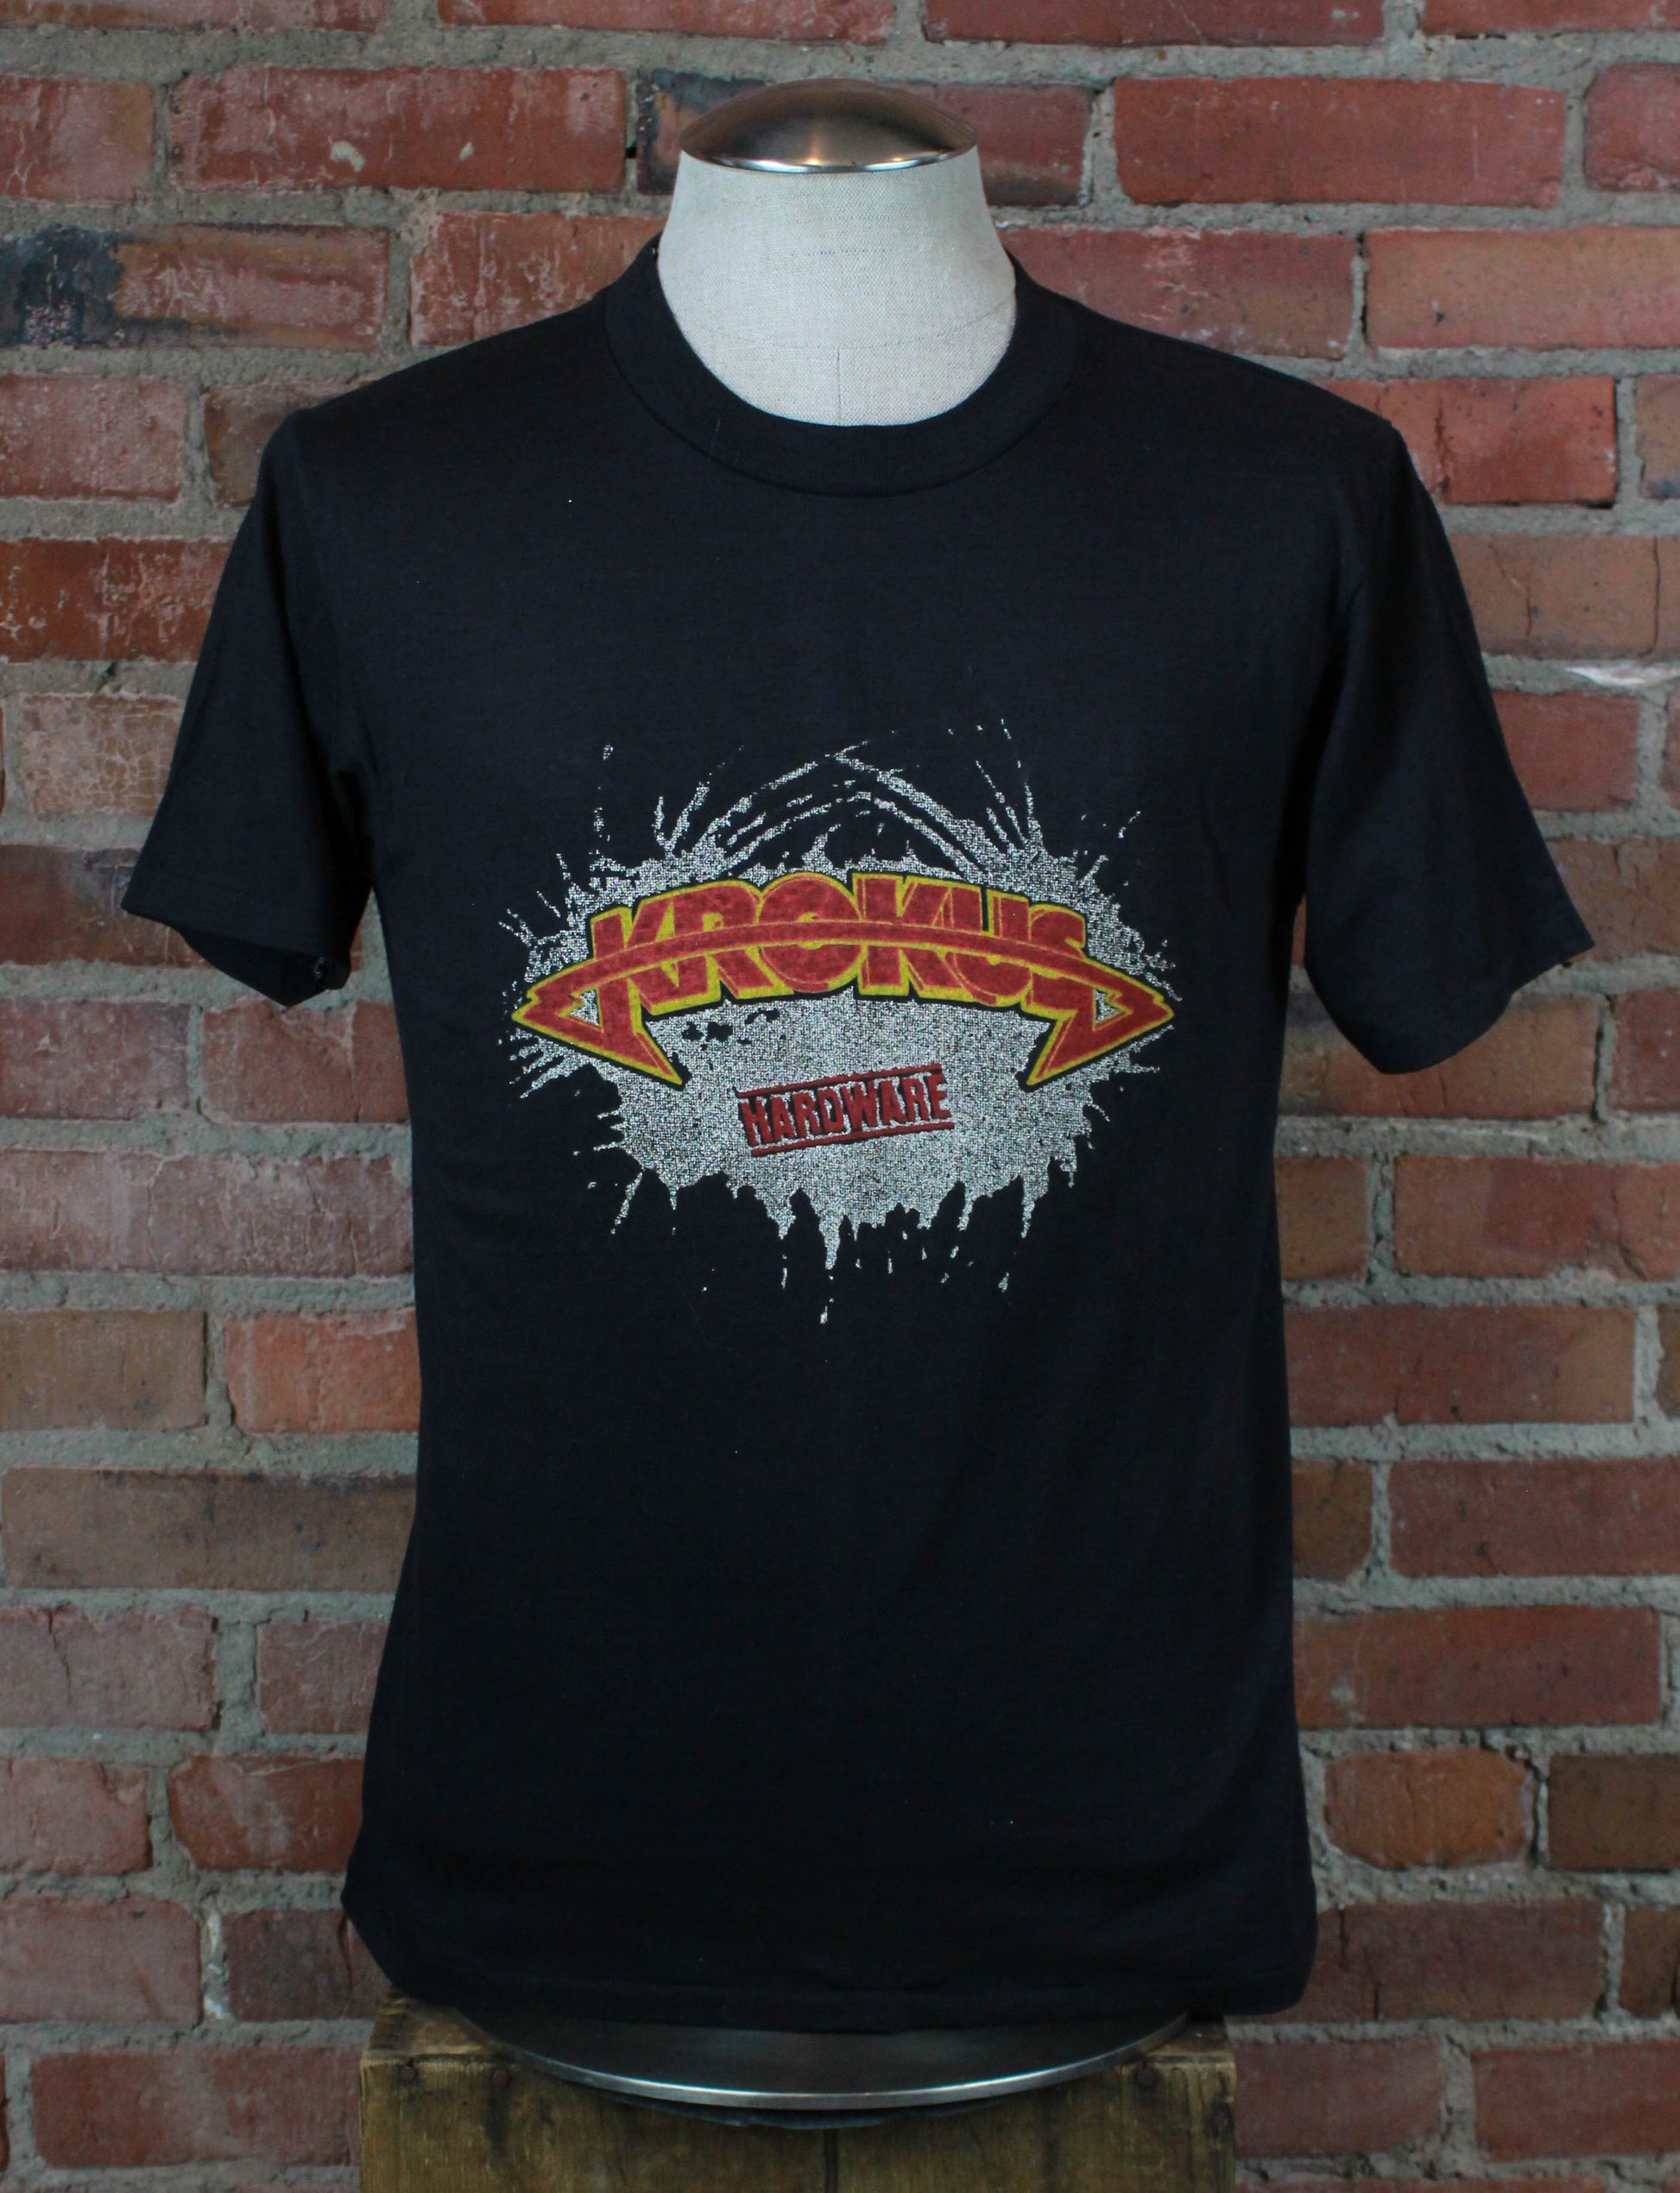 Vintage Krokus Concert T Shirt 1981 Hardware Tour Of Britain - Medium